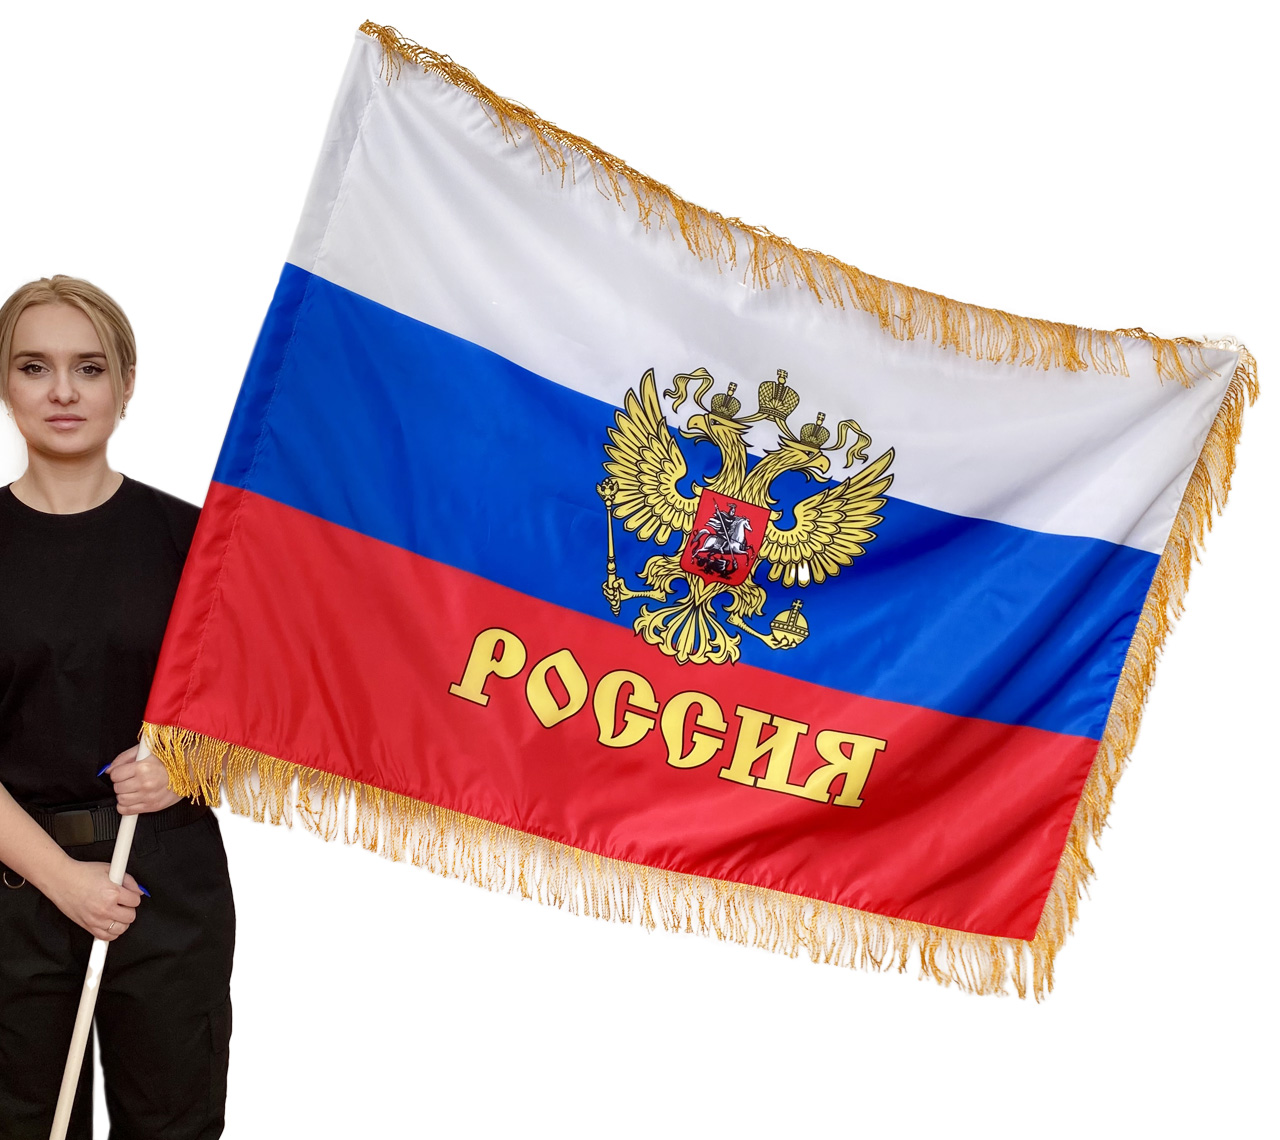 Двусторонний флаг России с гербом и бахромой